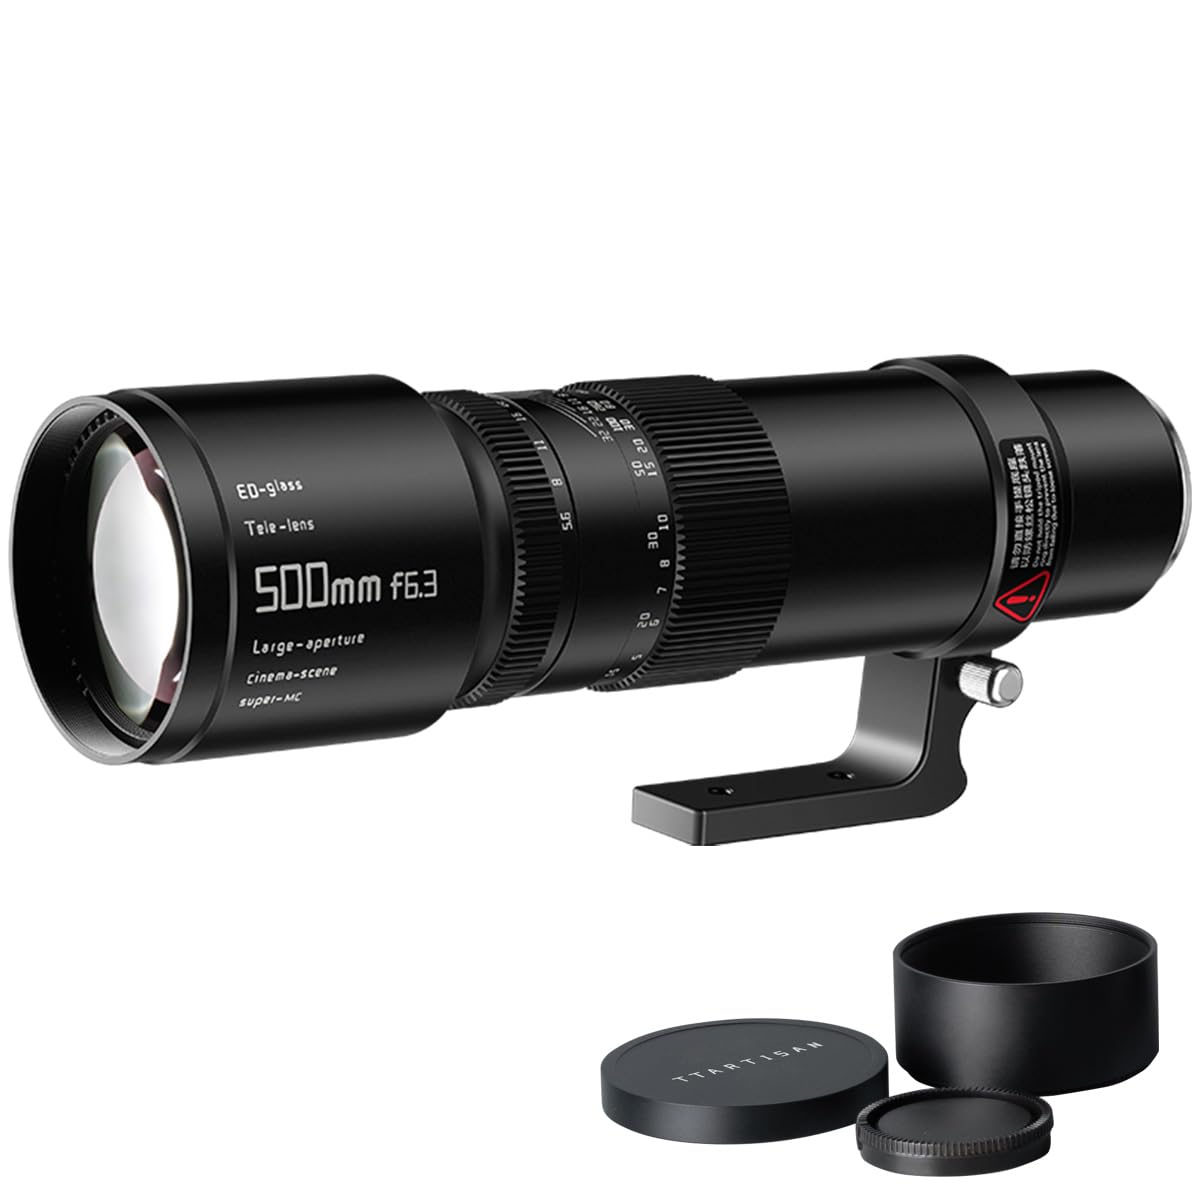 TTARTISAN 500mm F6.3 Telephoto Lens for Nikon Full Frame Manual Lens Compatible with Nikon Z Mount Mirrorless Cameras Z5 Z6